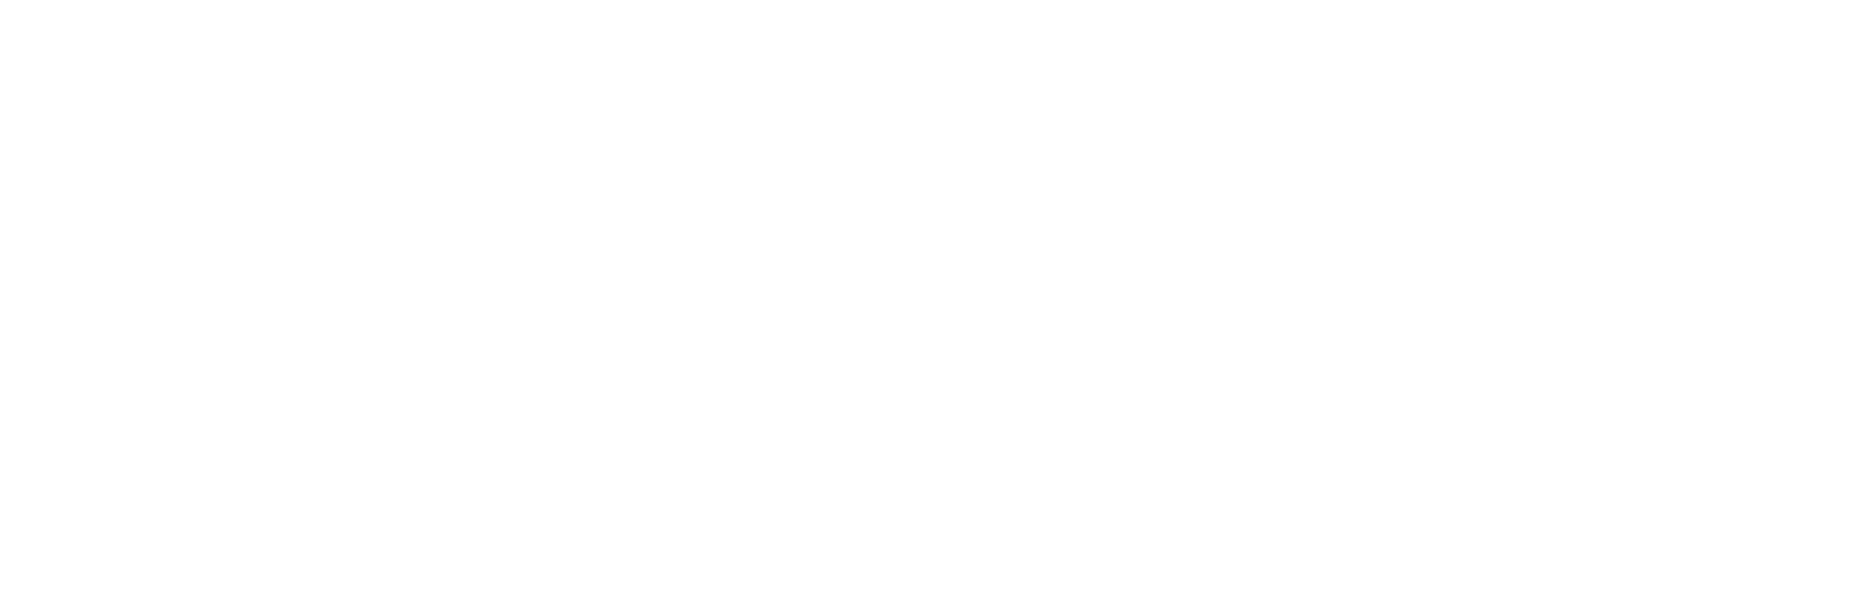 Viridian Capital Logo in white